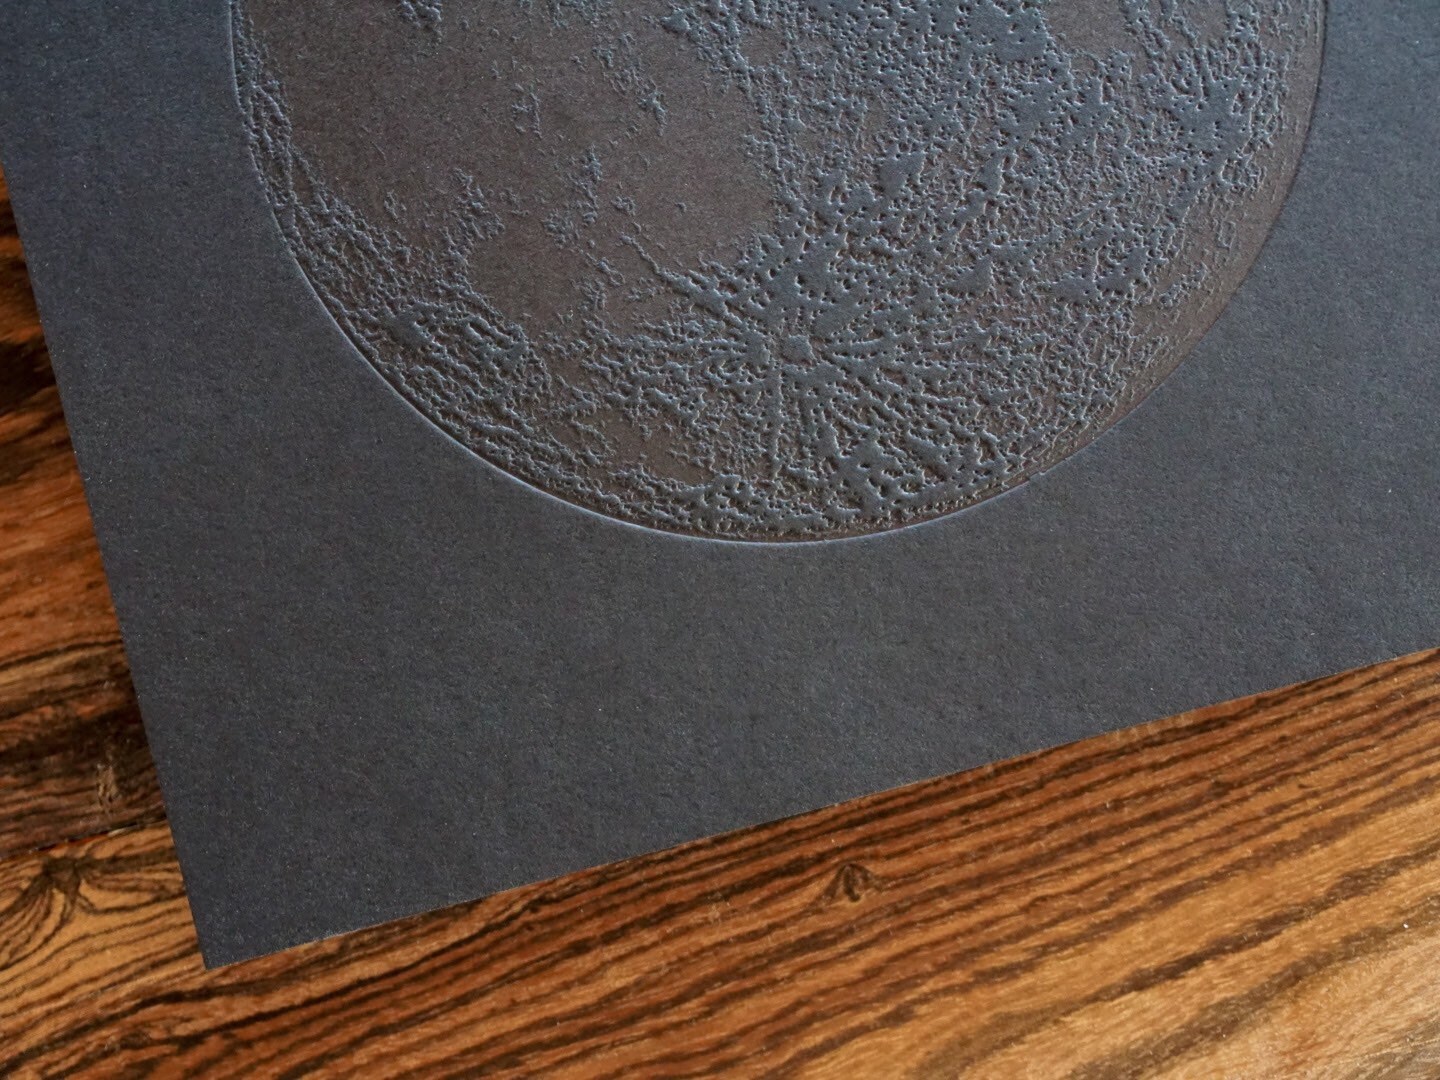 Full Moon New Moon Eclipse Lunar Print Letterpress Art 8x8 | Etsy